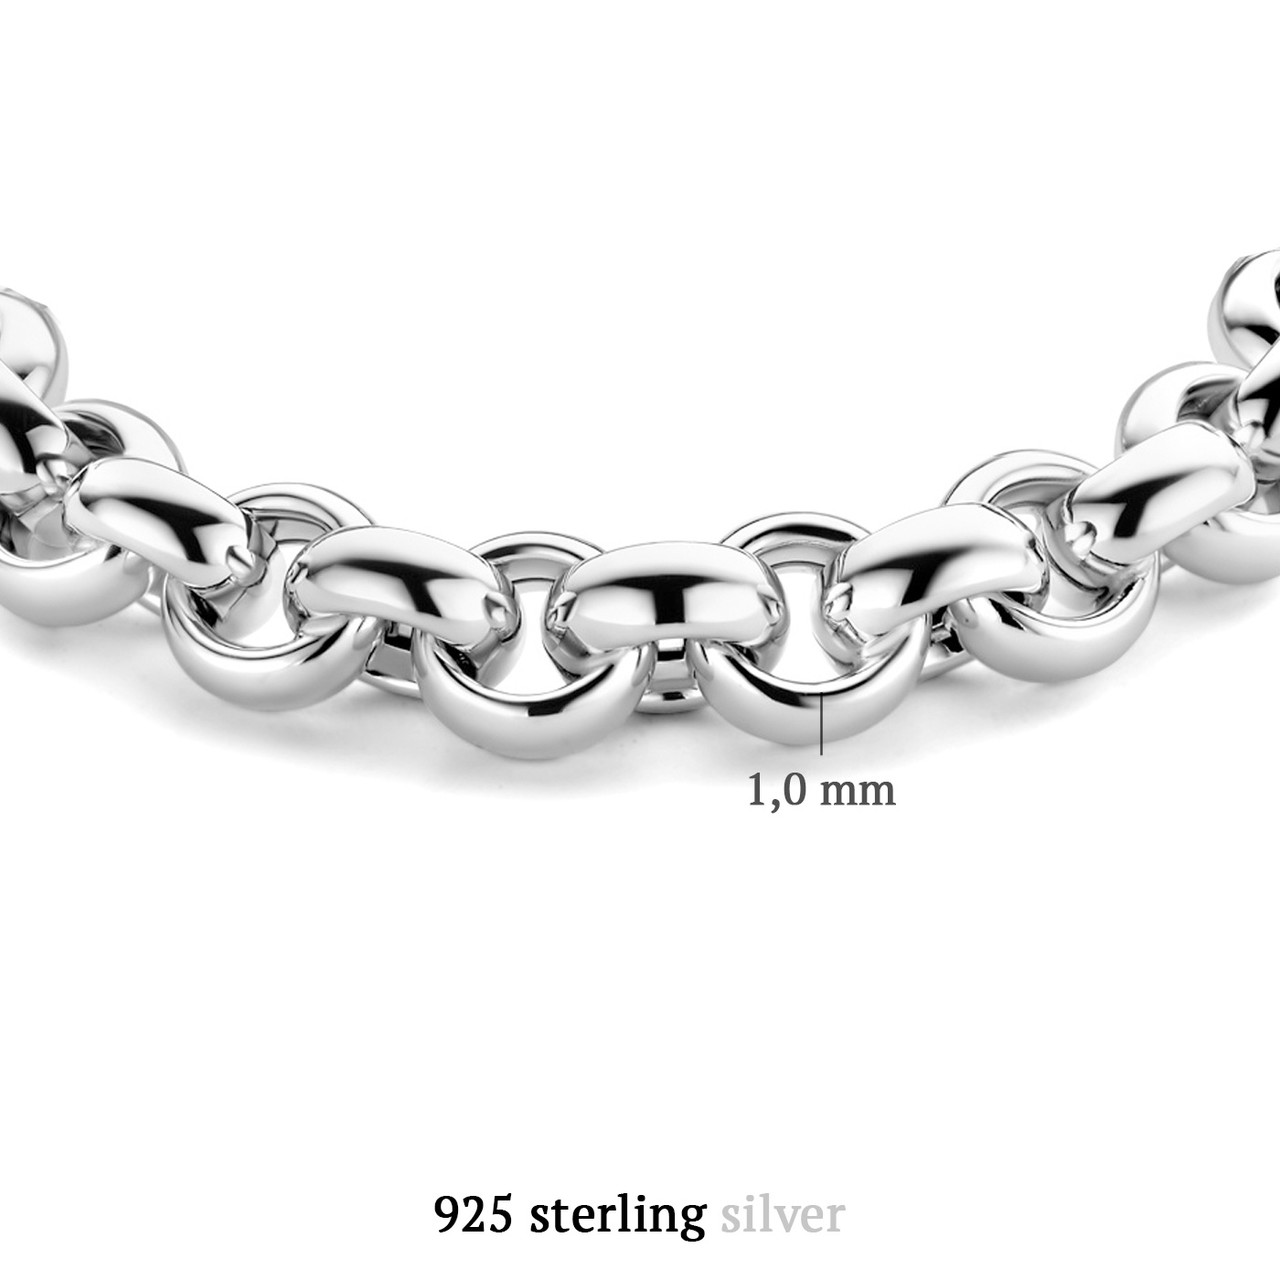 Parte Di Me - 925 sterling silver link bracelet PDM32011